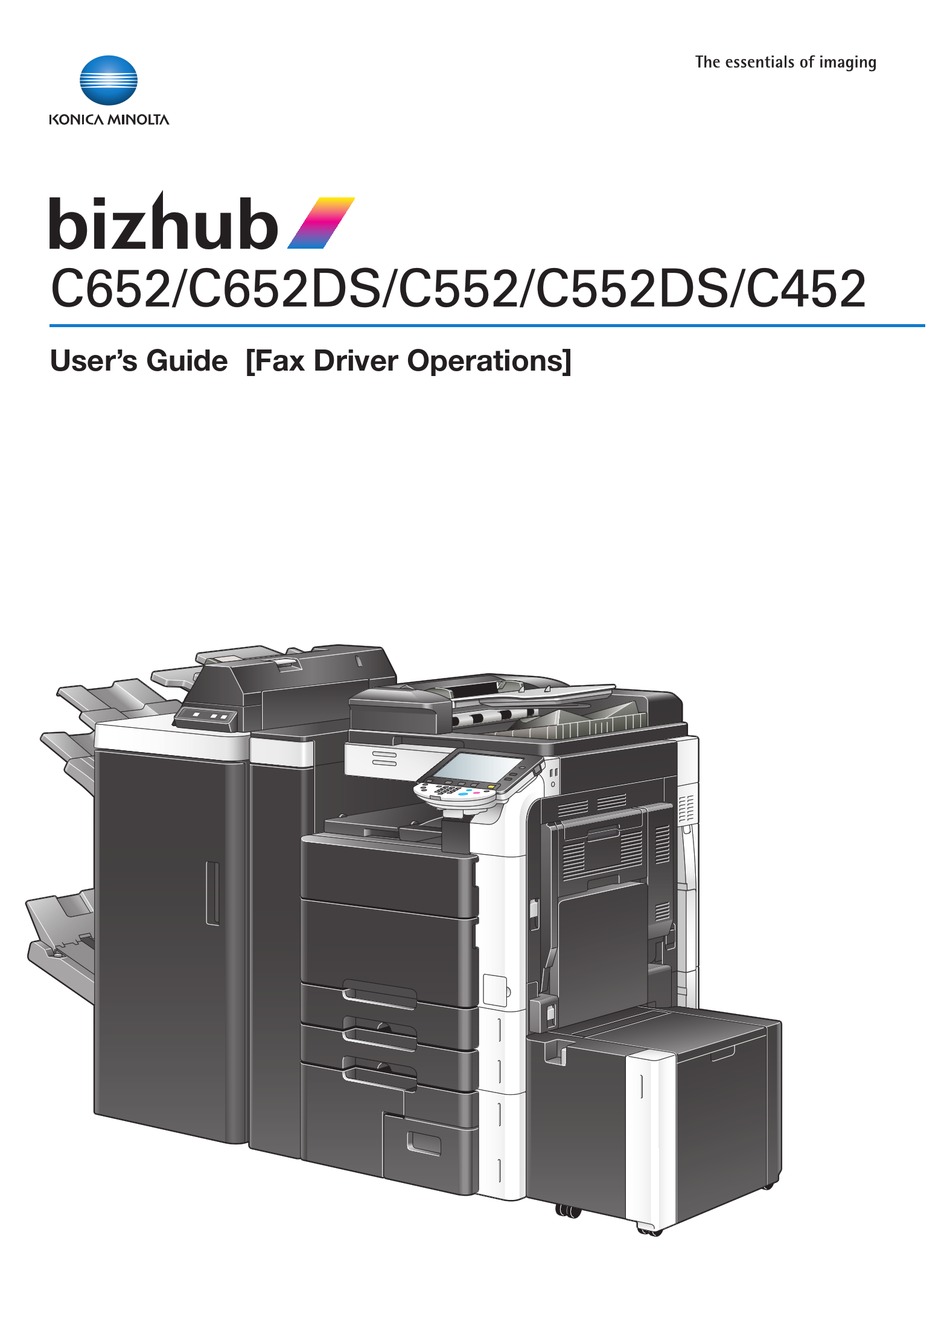 bizhub c452 service manual pdf